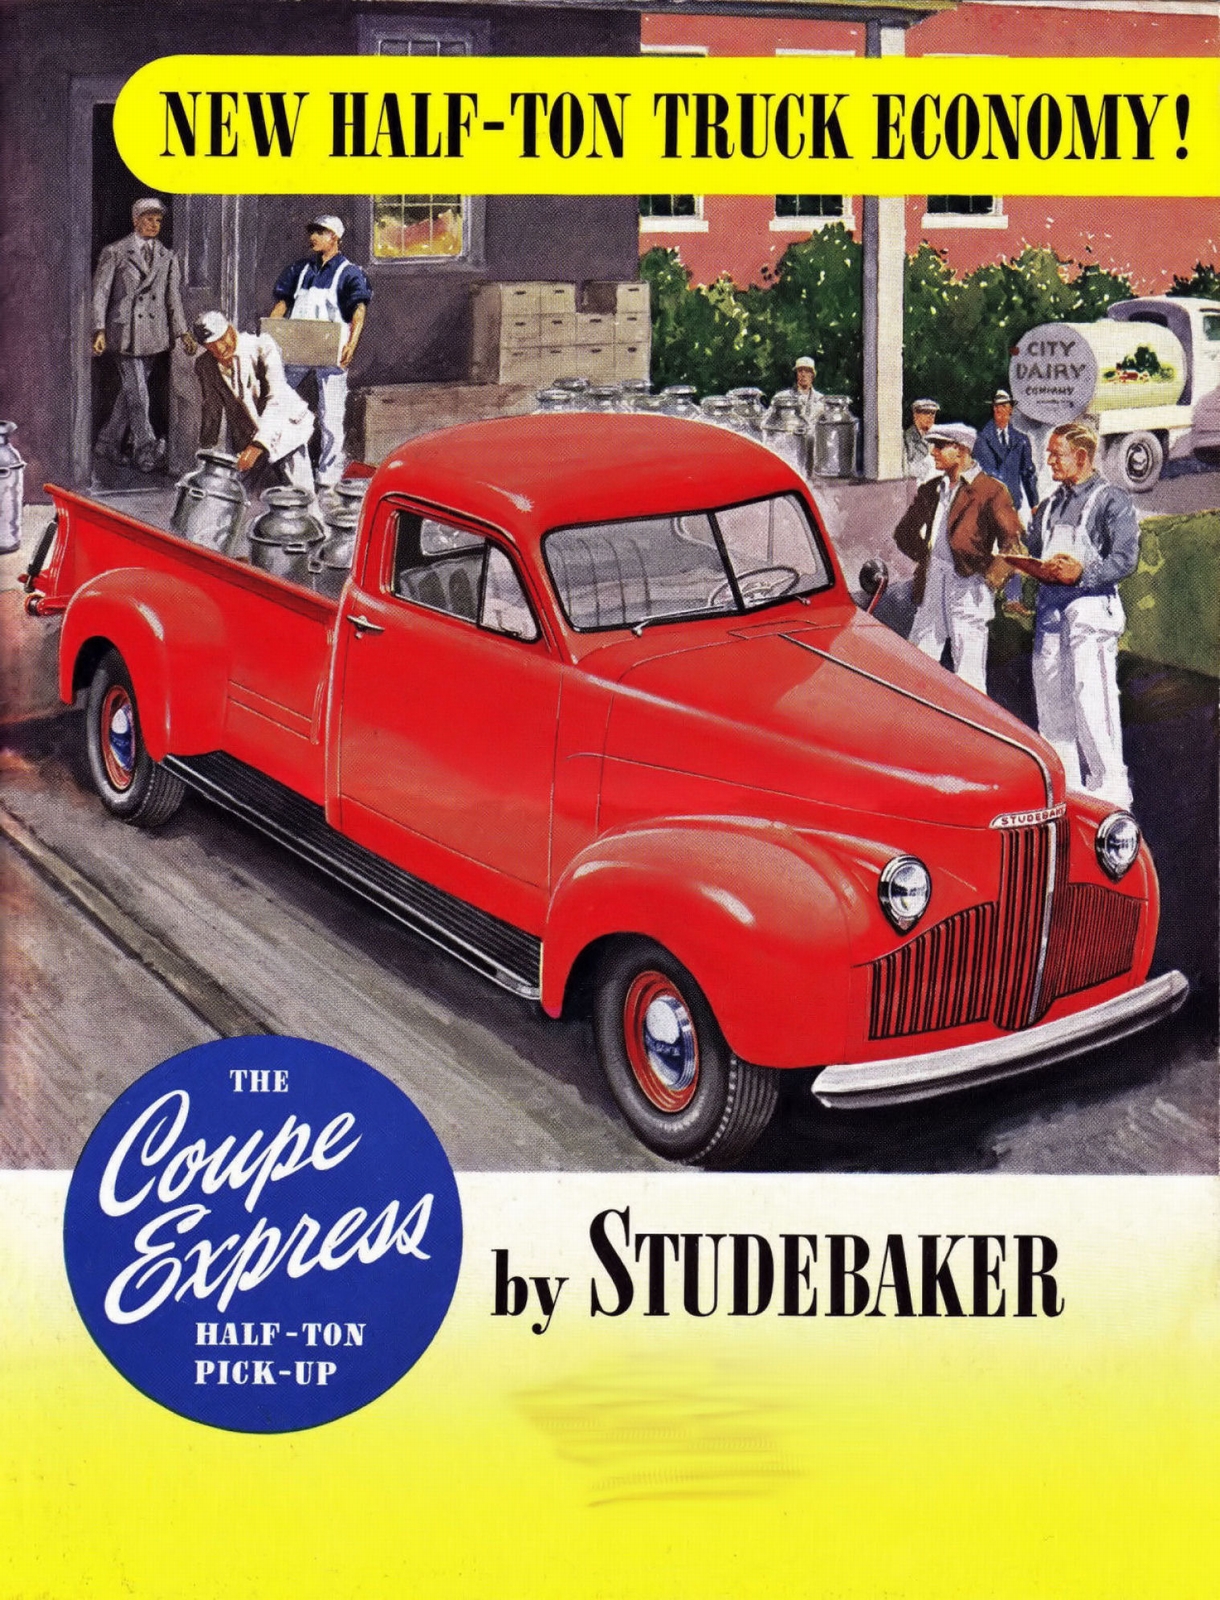 n_1946 Studebaker Coupe Express-01.jpg